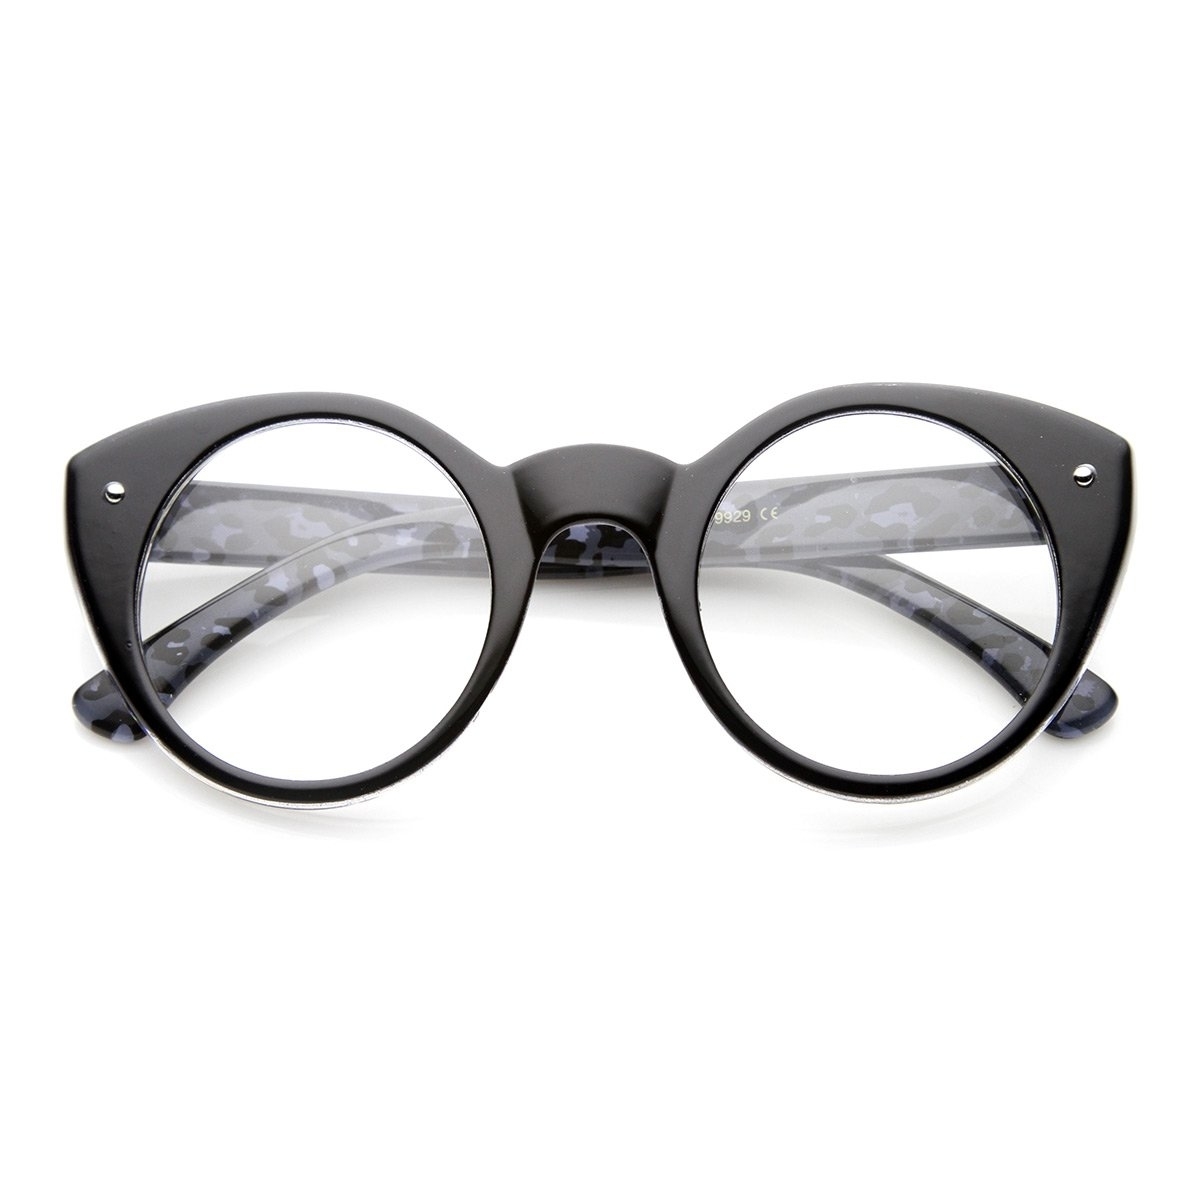 Round Cat Eye Clear Fashion Frame Glasses - Black-Snakeskin Clear